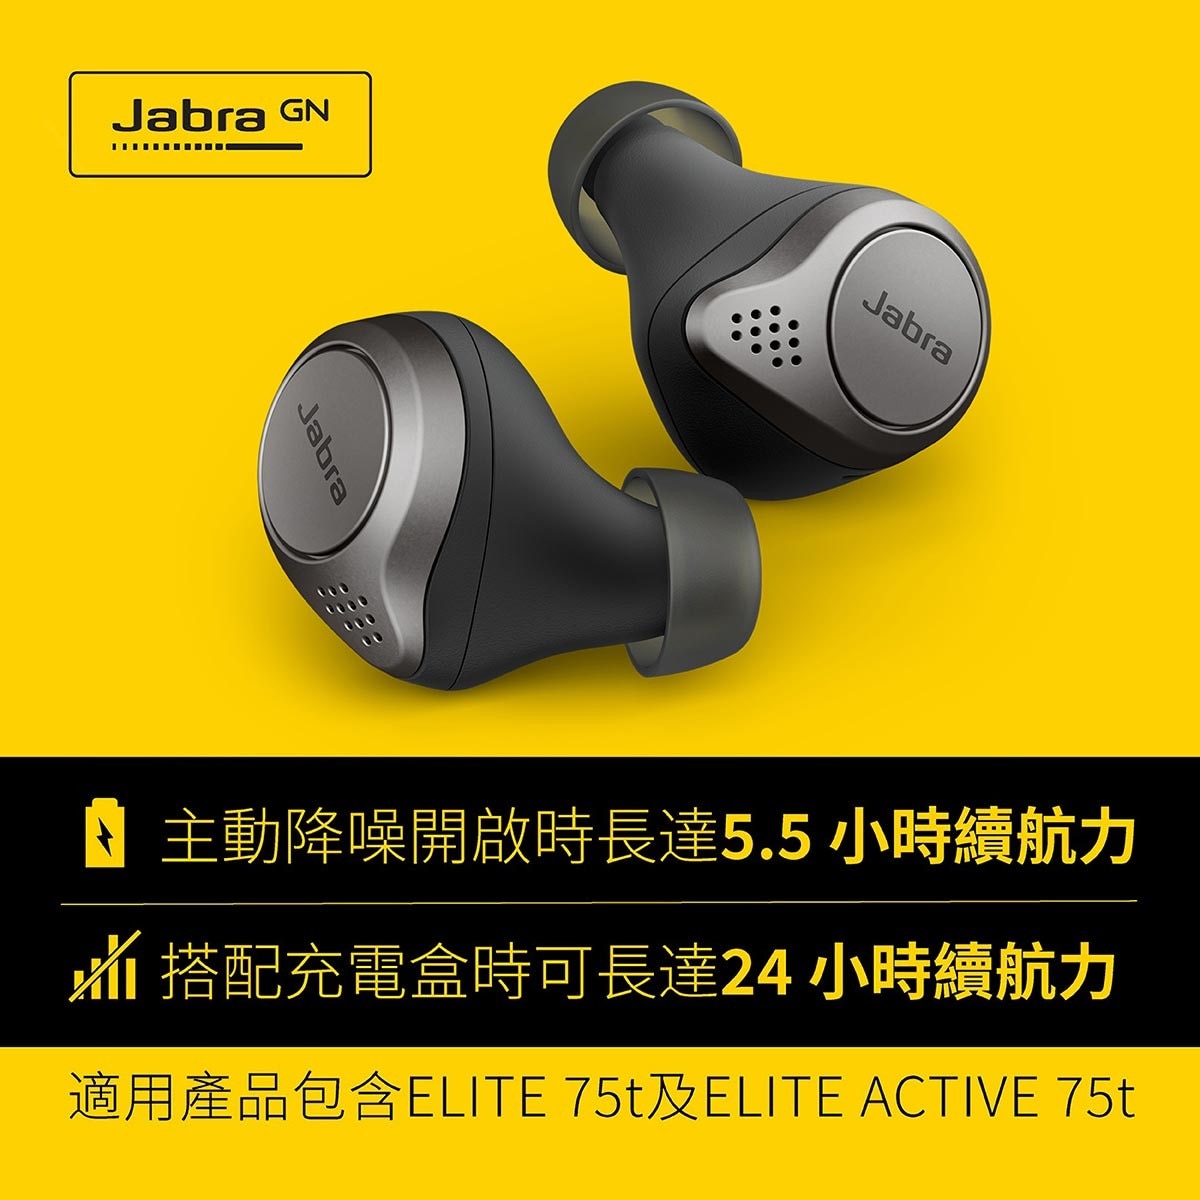 Jabra Elite 75t ANC 降噪真無線藍牙耳機(鈦黑色)，四麥克風技術，藍牙5.0、IP55防塵防水、電池續航7.5小時。